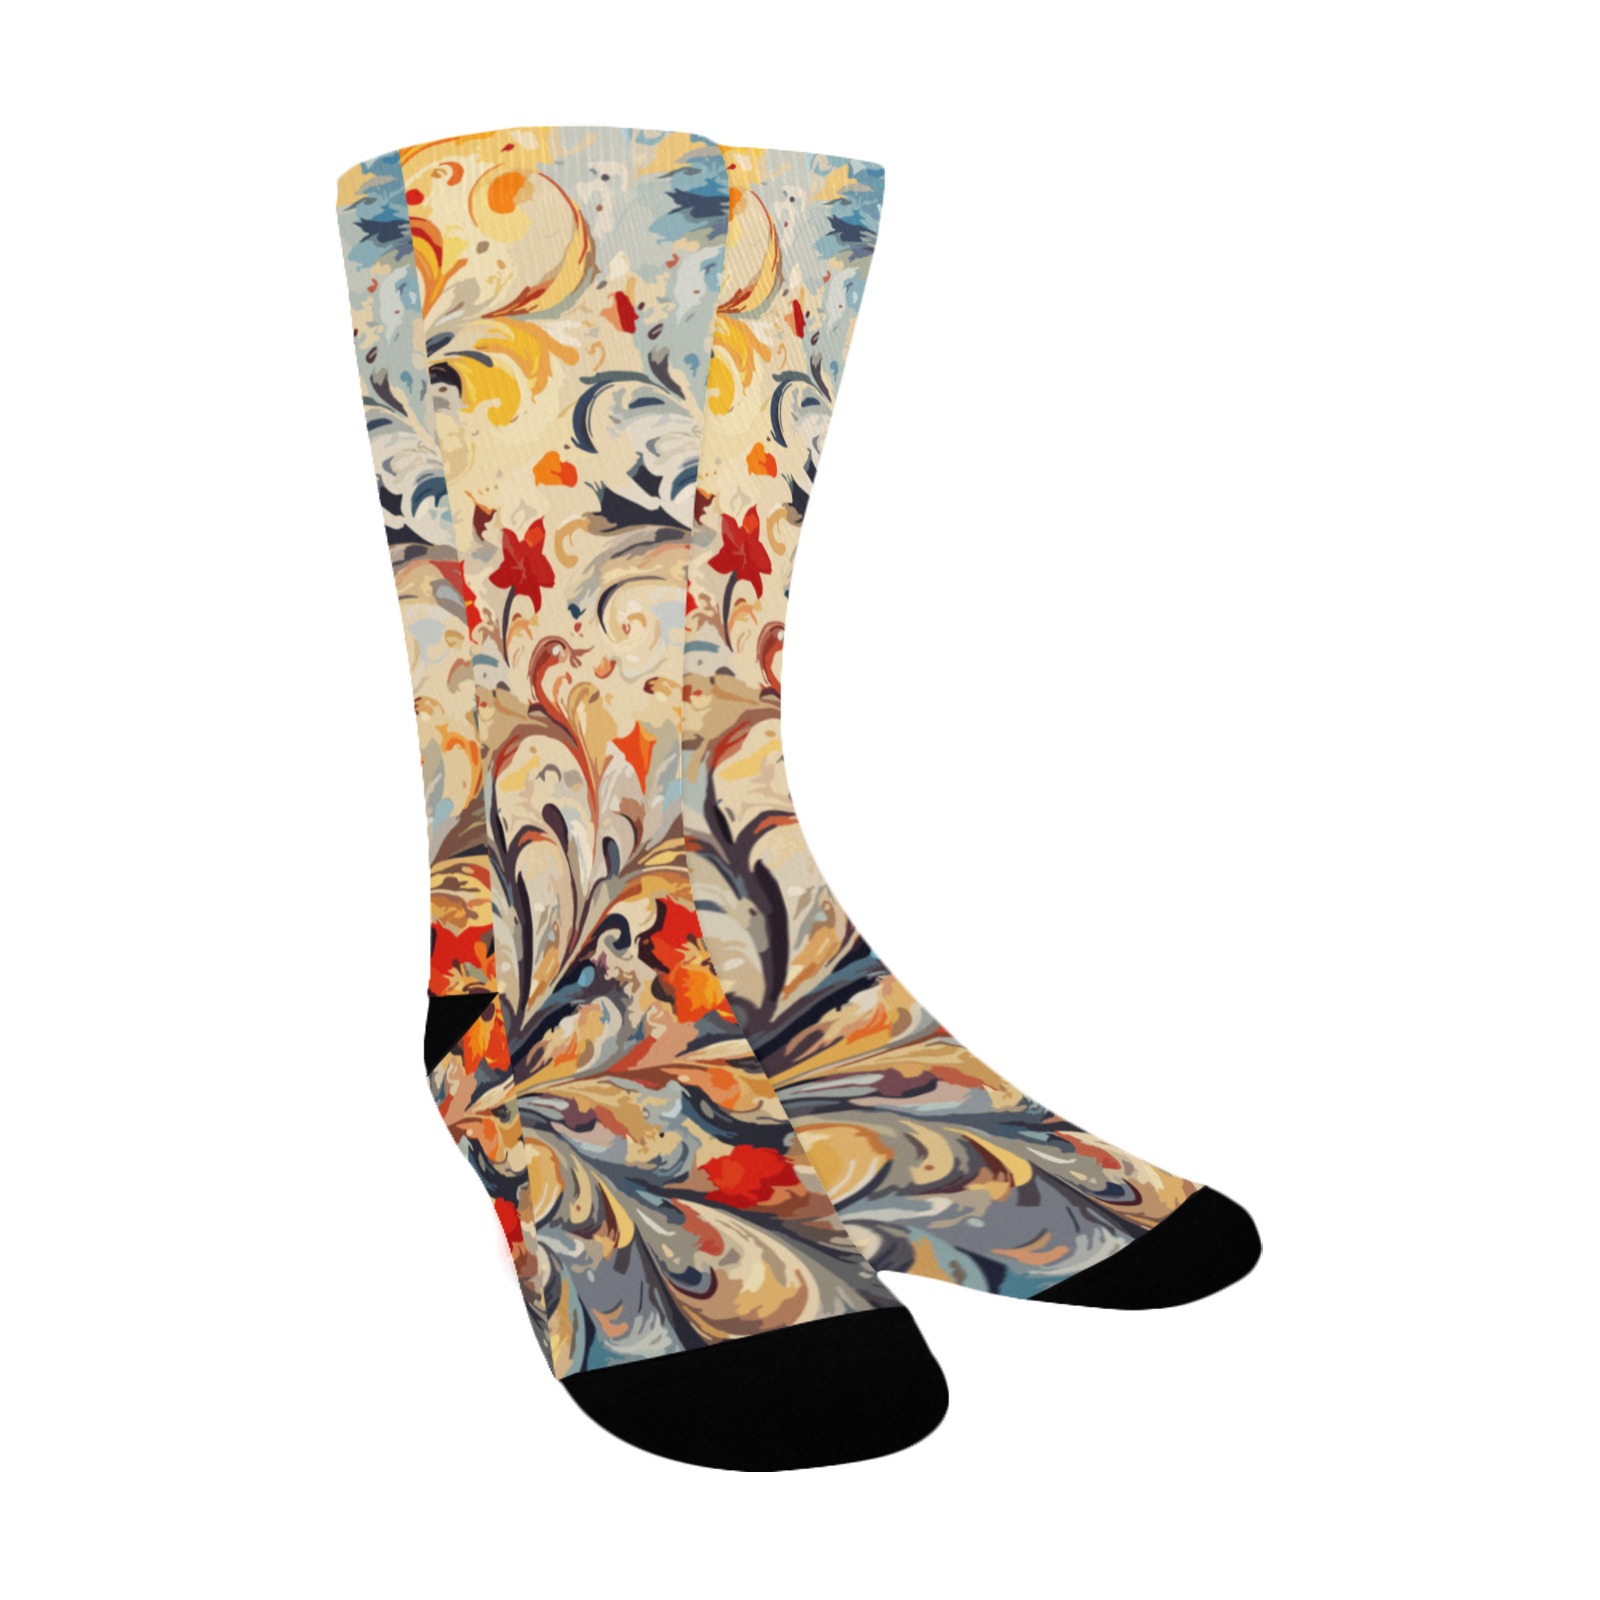 Cool decorative floral ornament. Colorful fantasy Custom Socks for Women